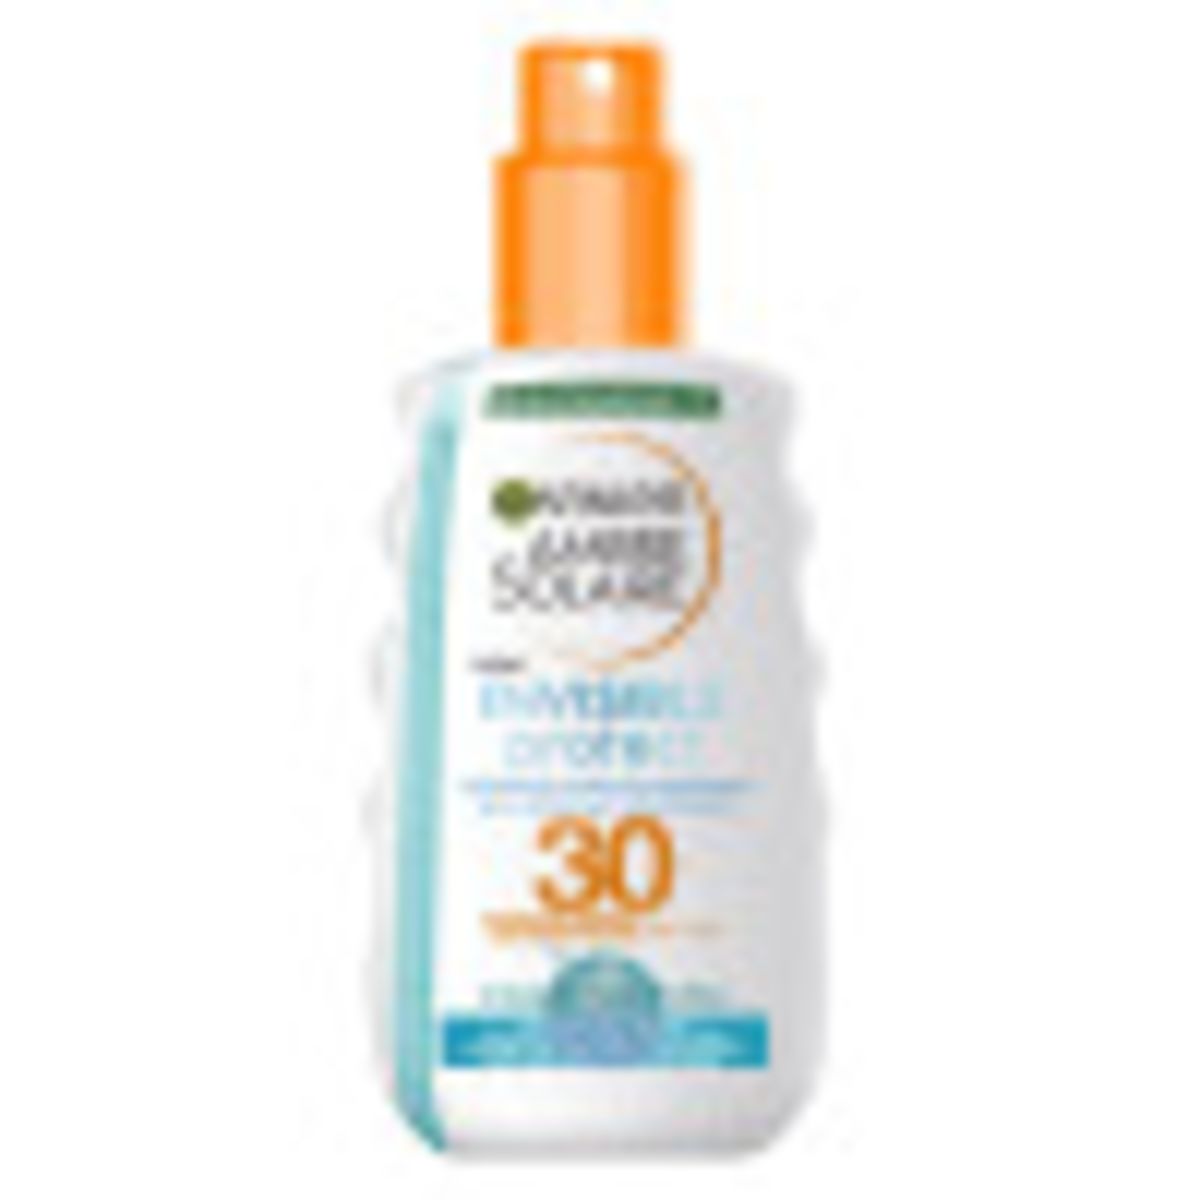 Garnier Ambre Solaire Clear Protect spray SPF 30